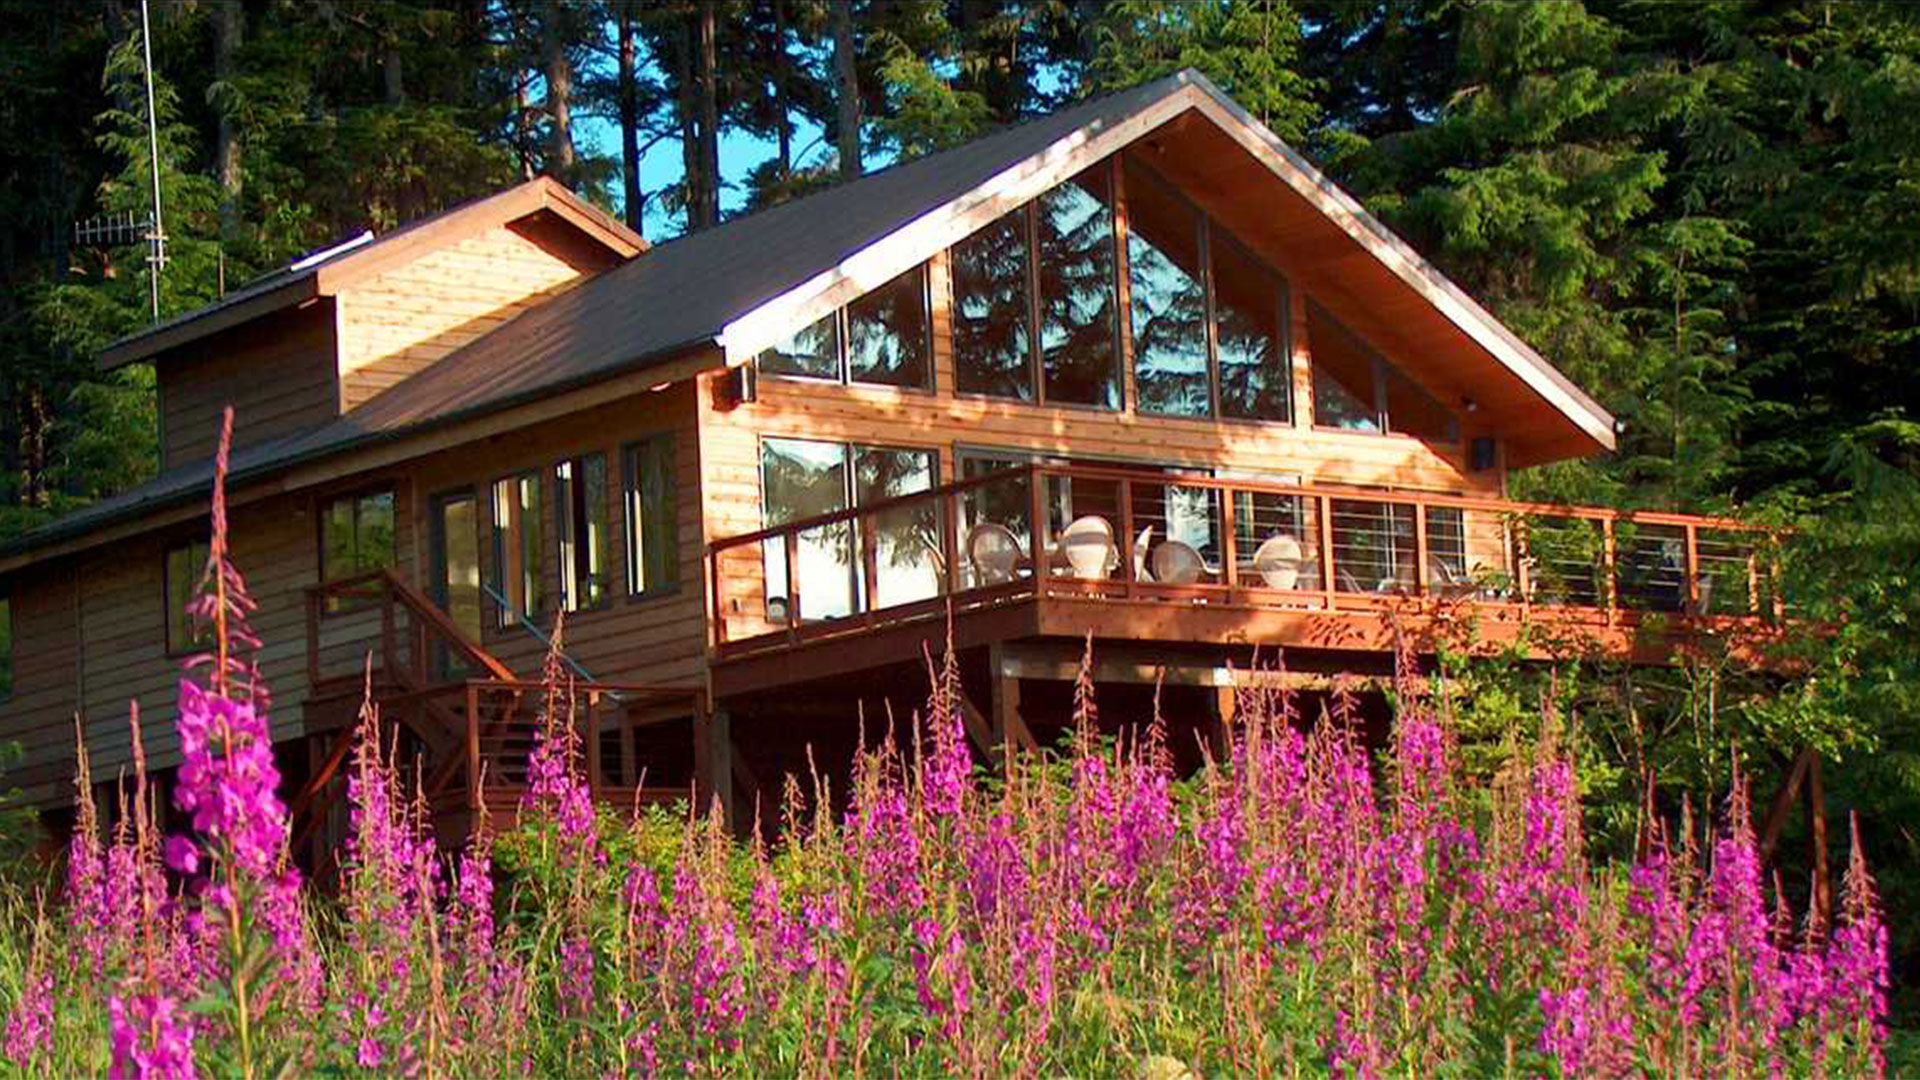 EXTRAORDINARY-Alaska Fireweed Frames the Main Lodge